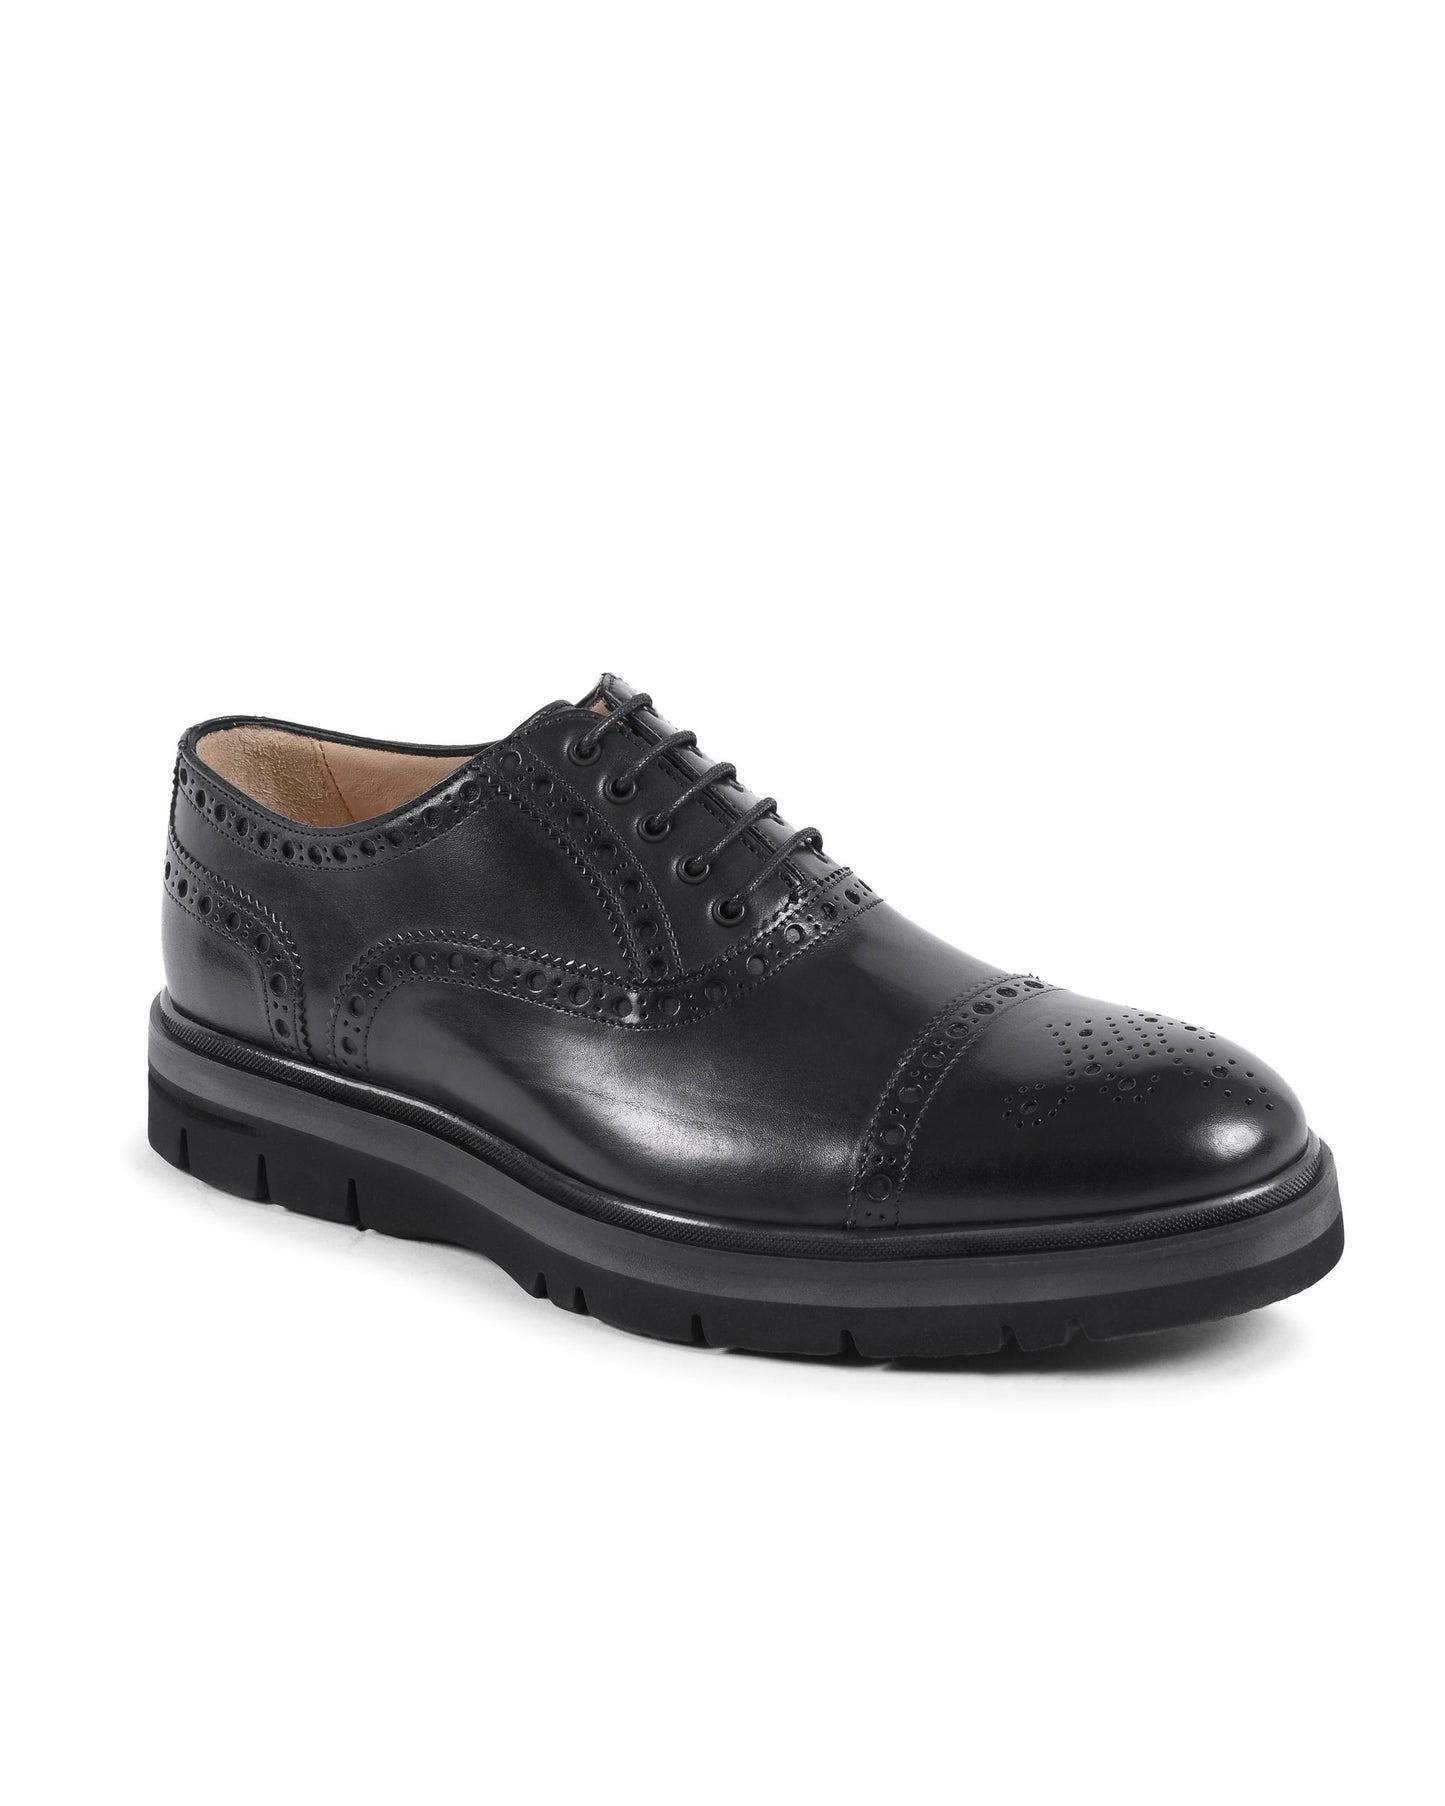 Dee Ocleppo Mens Brogue Shoes  EB130 VITELLO NERO